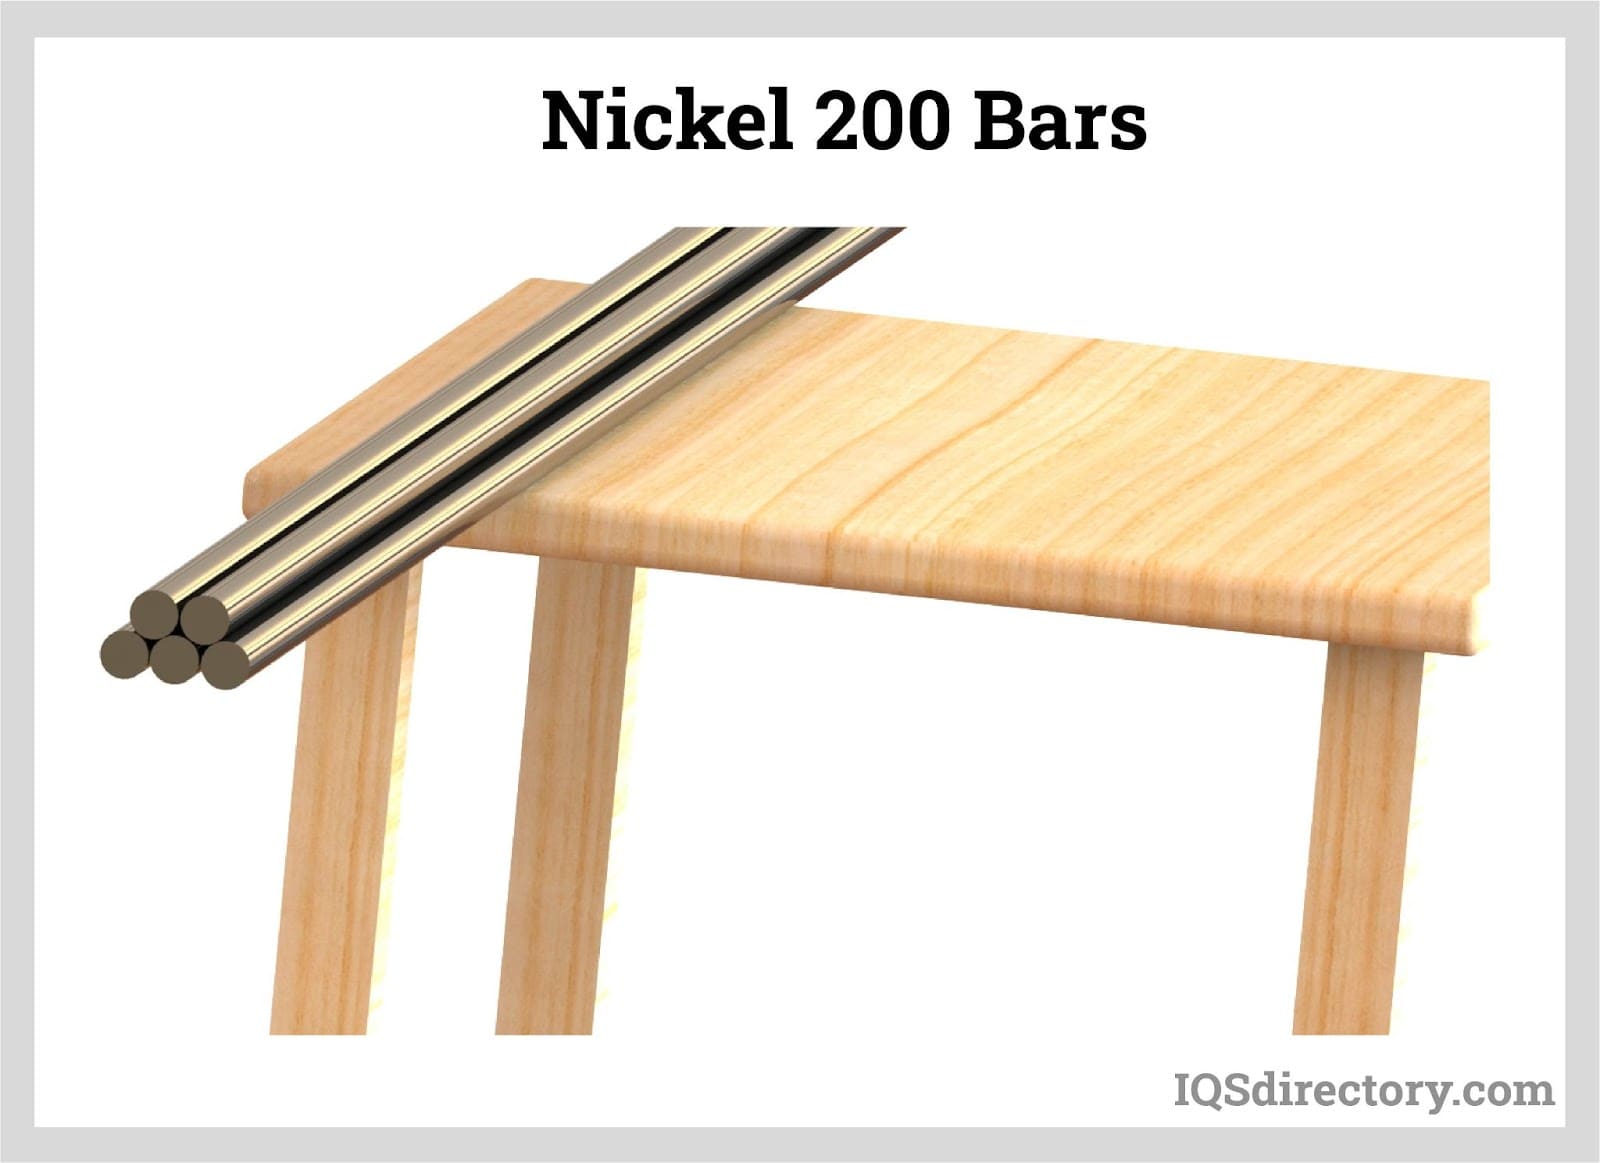 Nickel 200 Bars